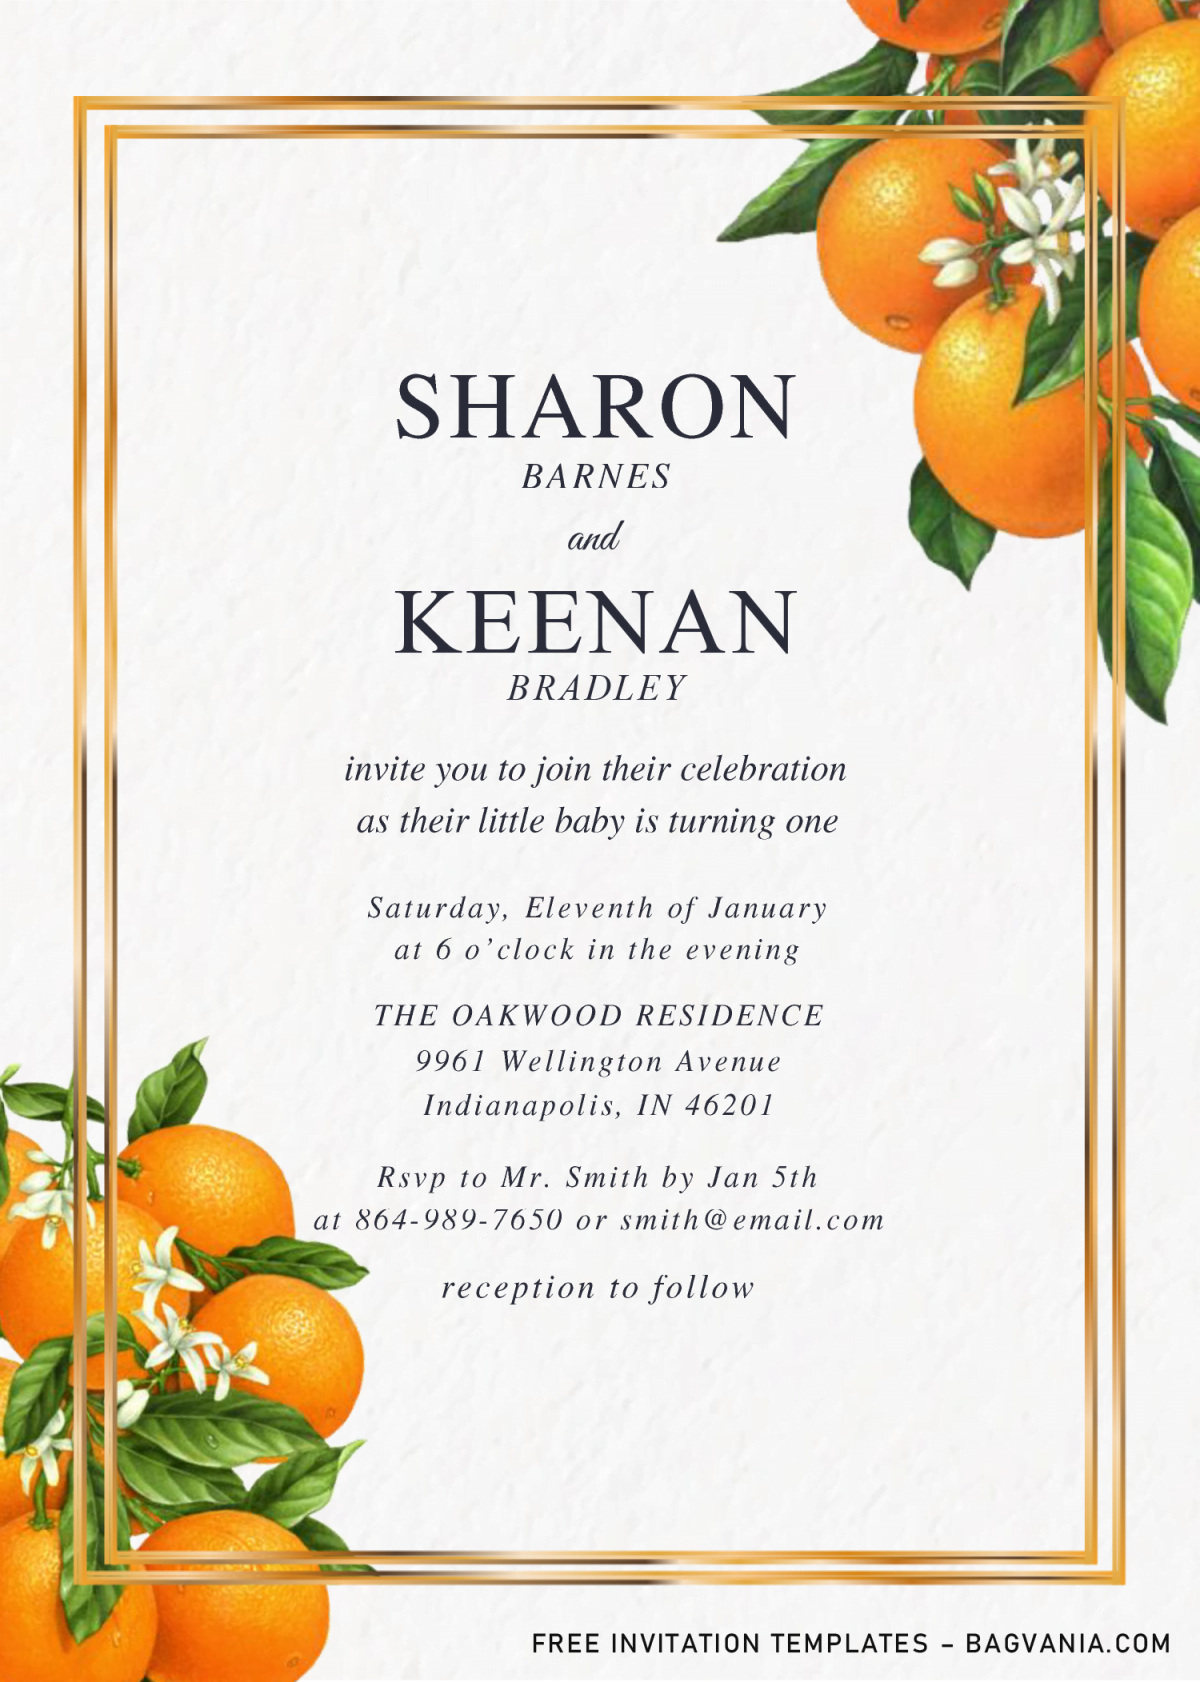 Orange Blossom Invitation Templates - Editable .Docx and has portrait orientation design